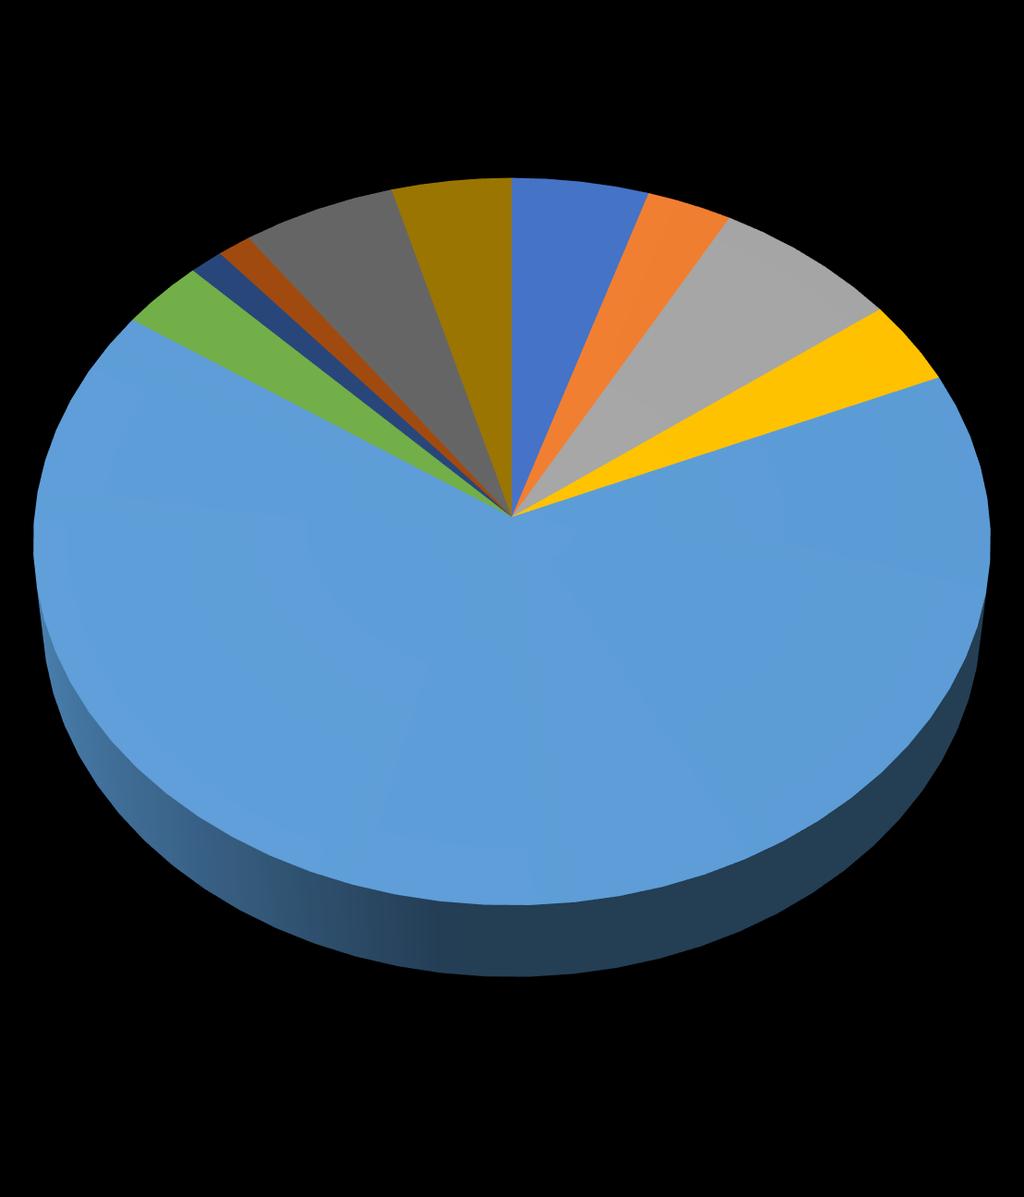 Figure 2: Pie chart of participants by region